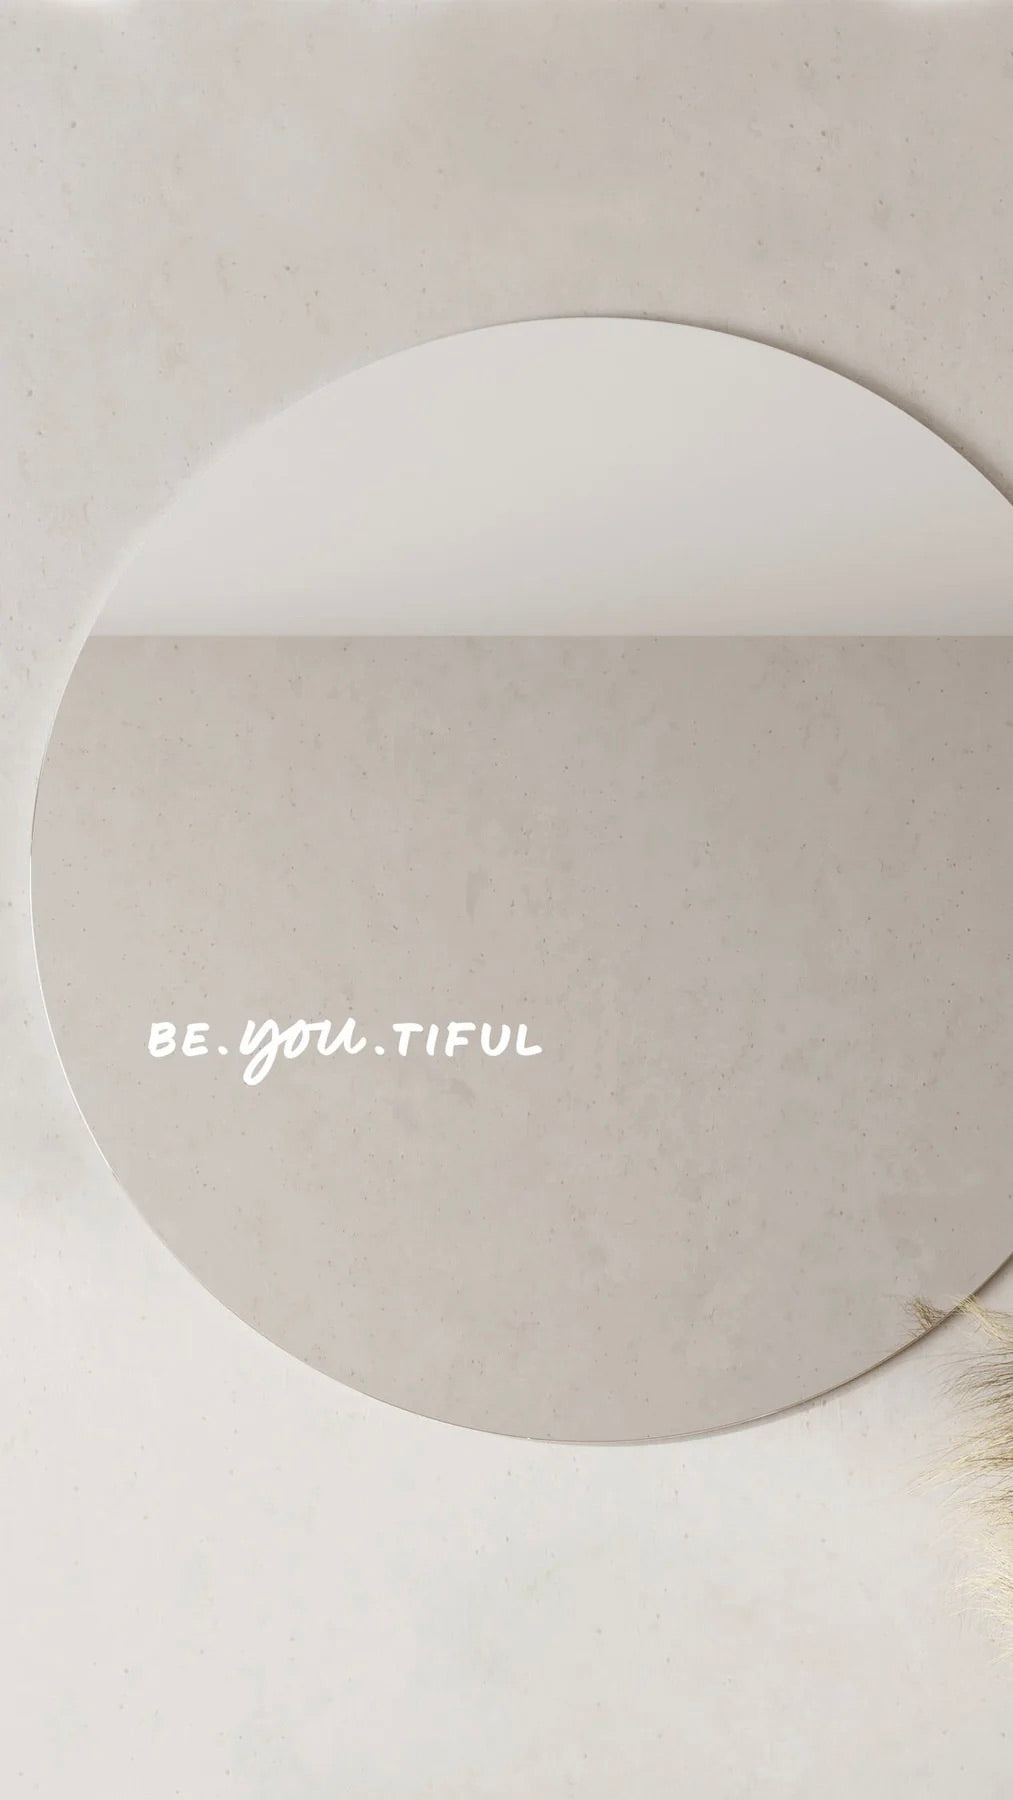 Be.YOU.tiful- Affirmation Mirror Sticker - Billy J